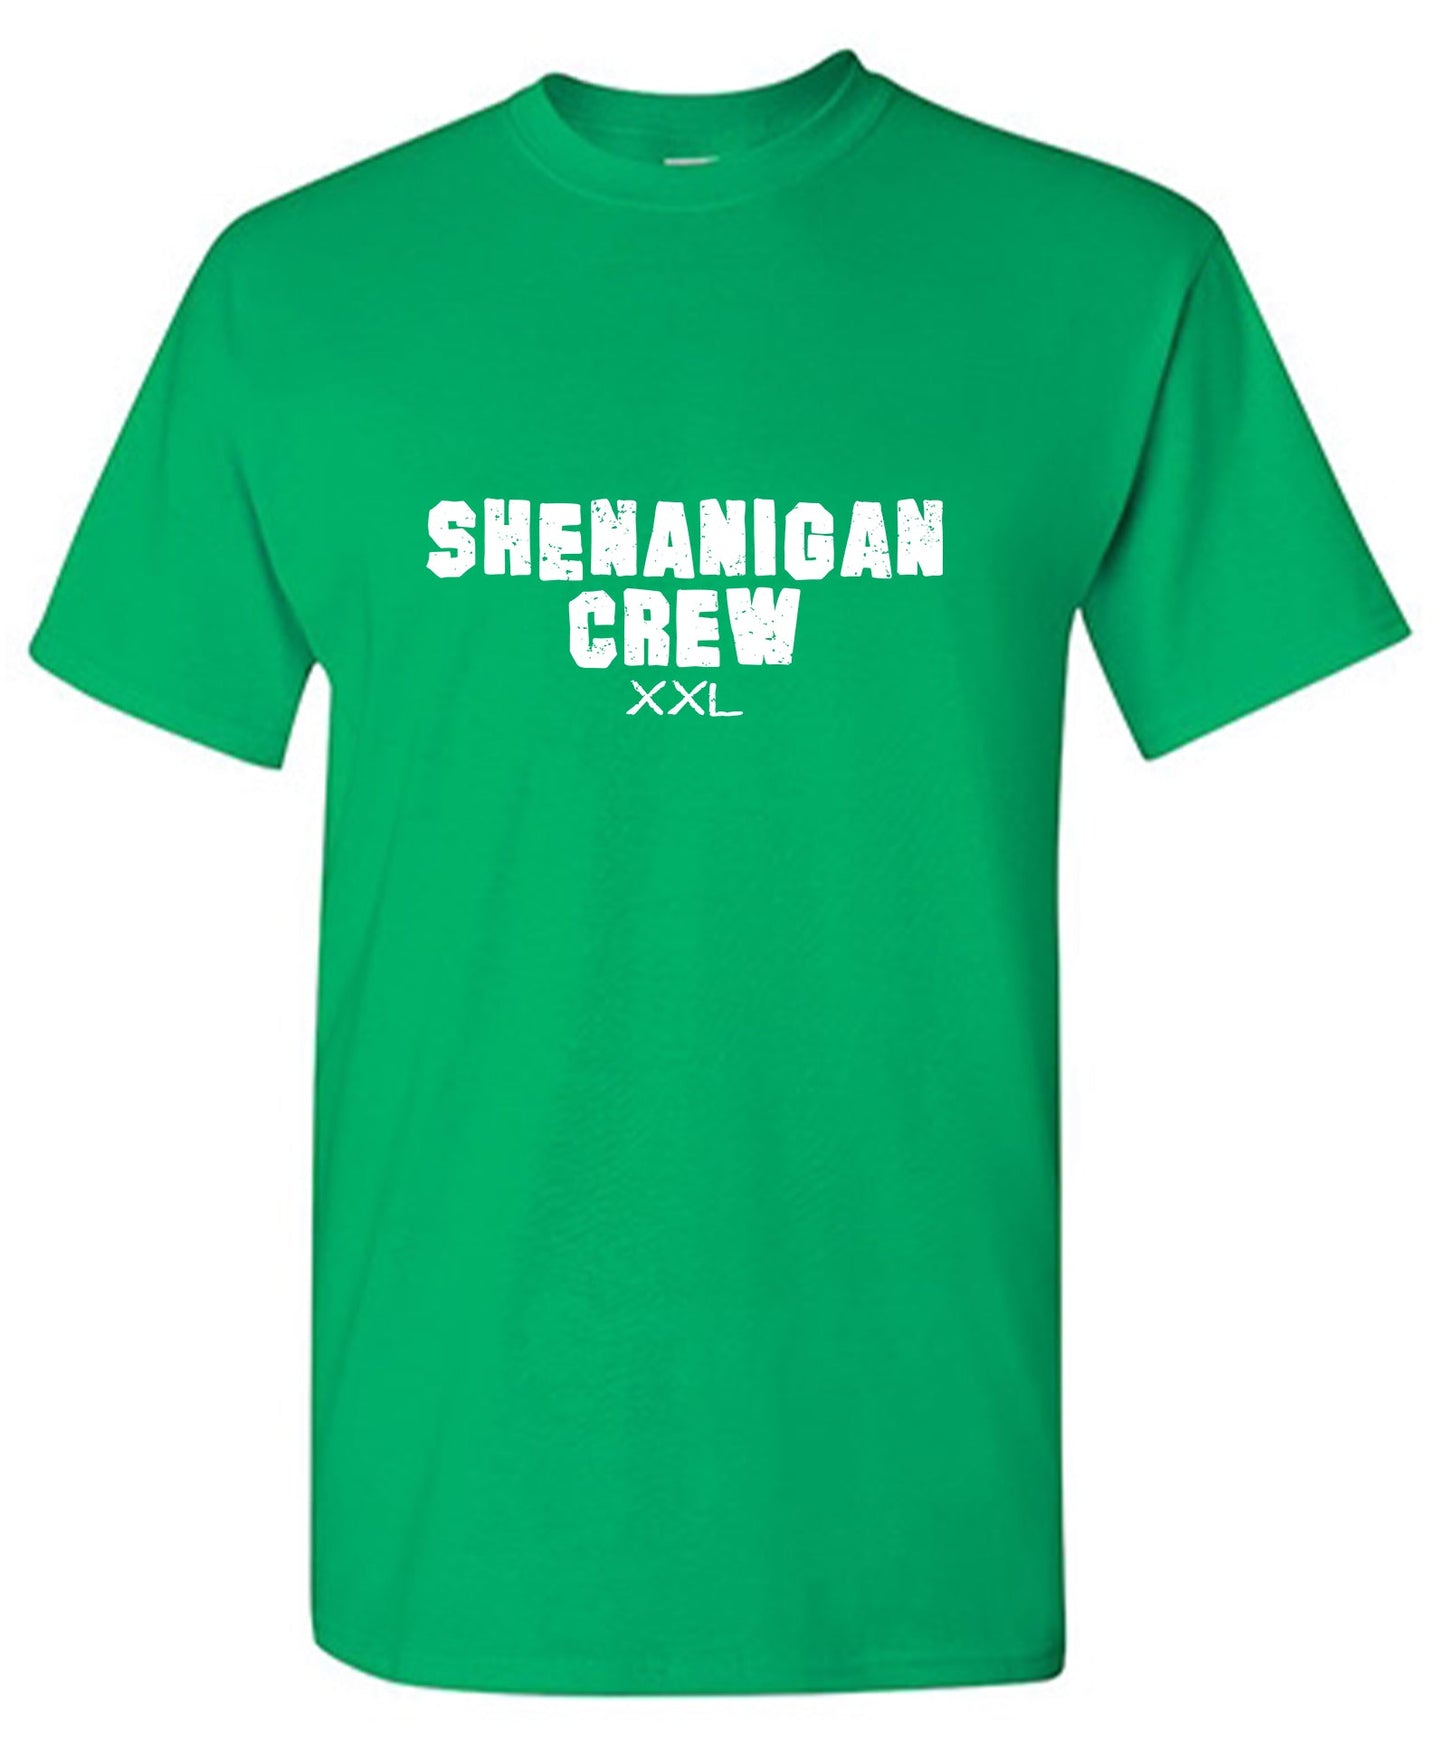 Shenanigan Crew Tee